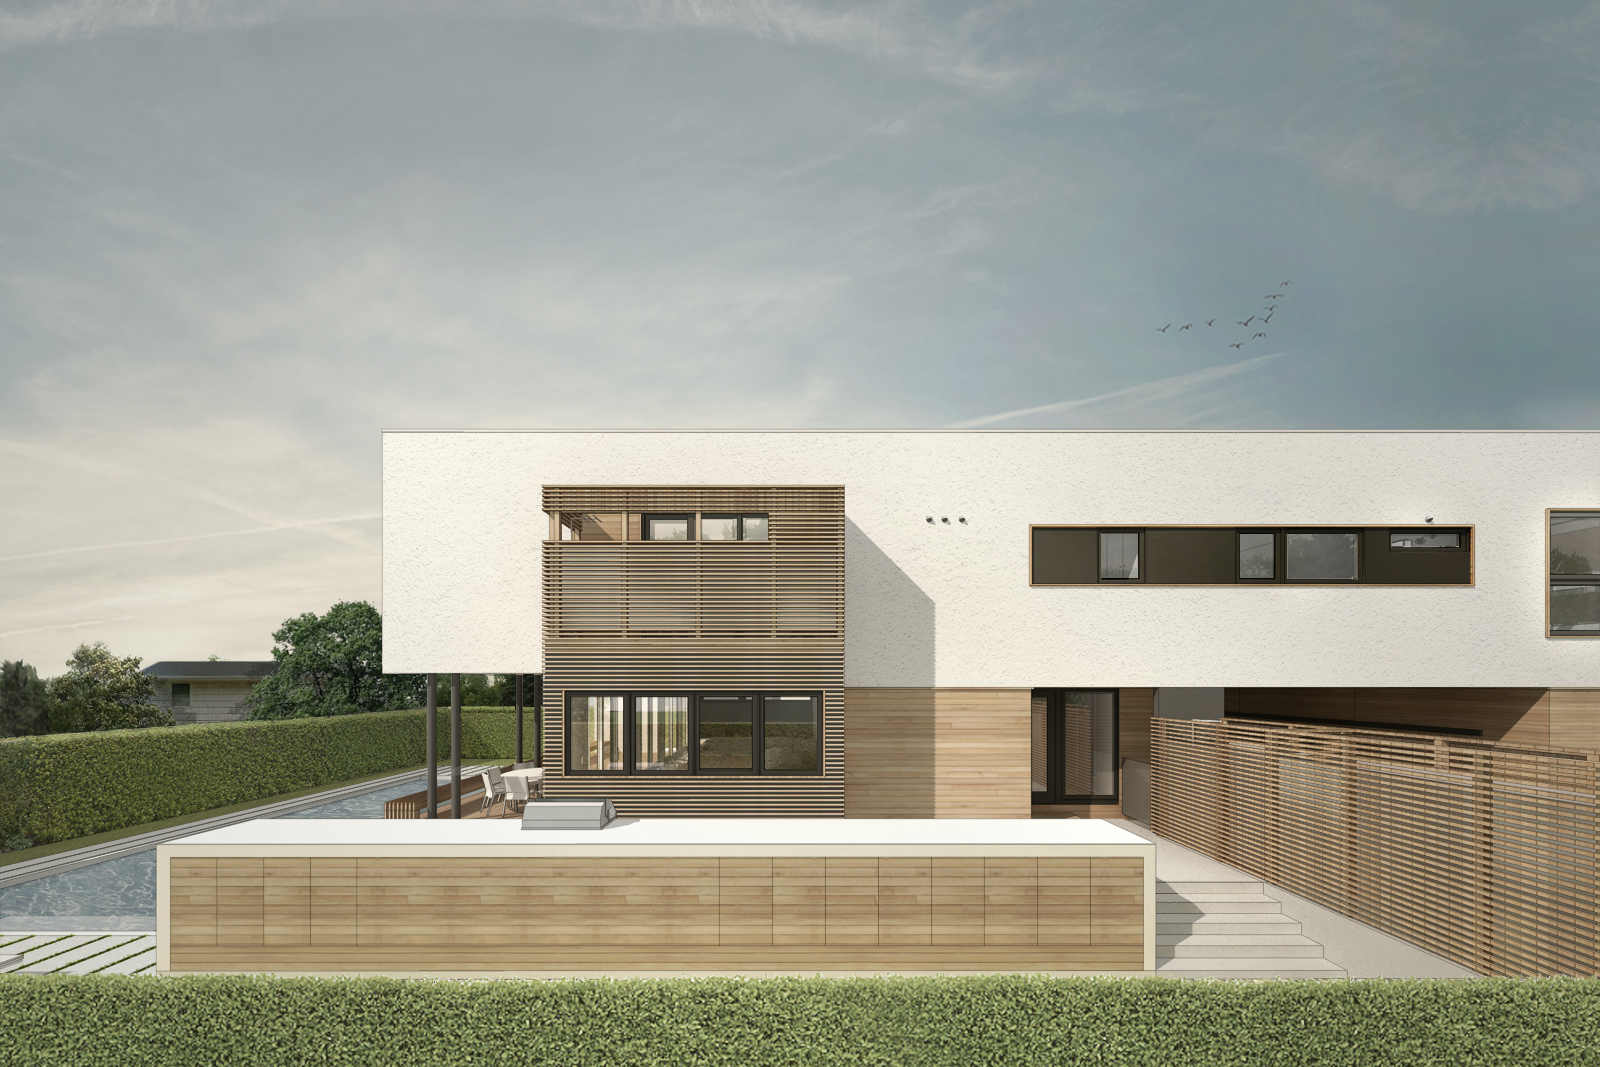 03-res4-resolution-4-architecture-modern-modular-prefab-long-beach-house-exterior-elevation-rendering.jpg